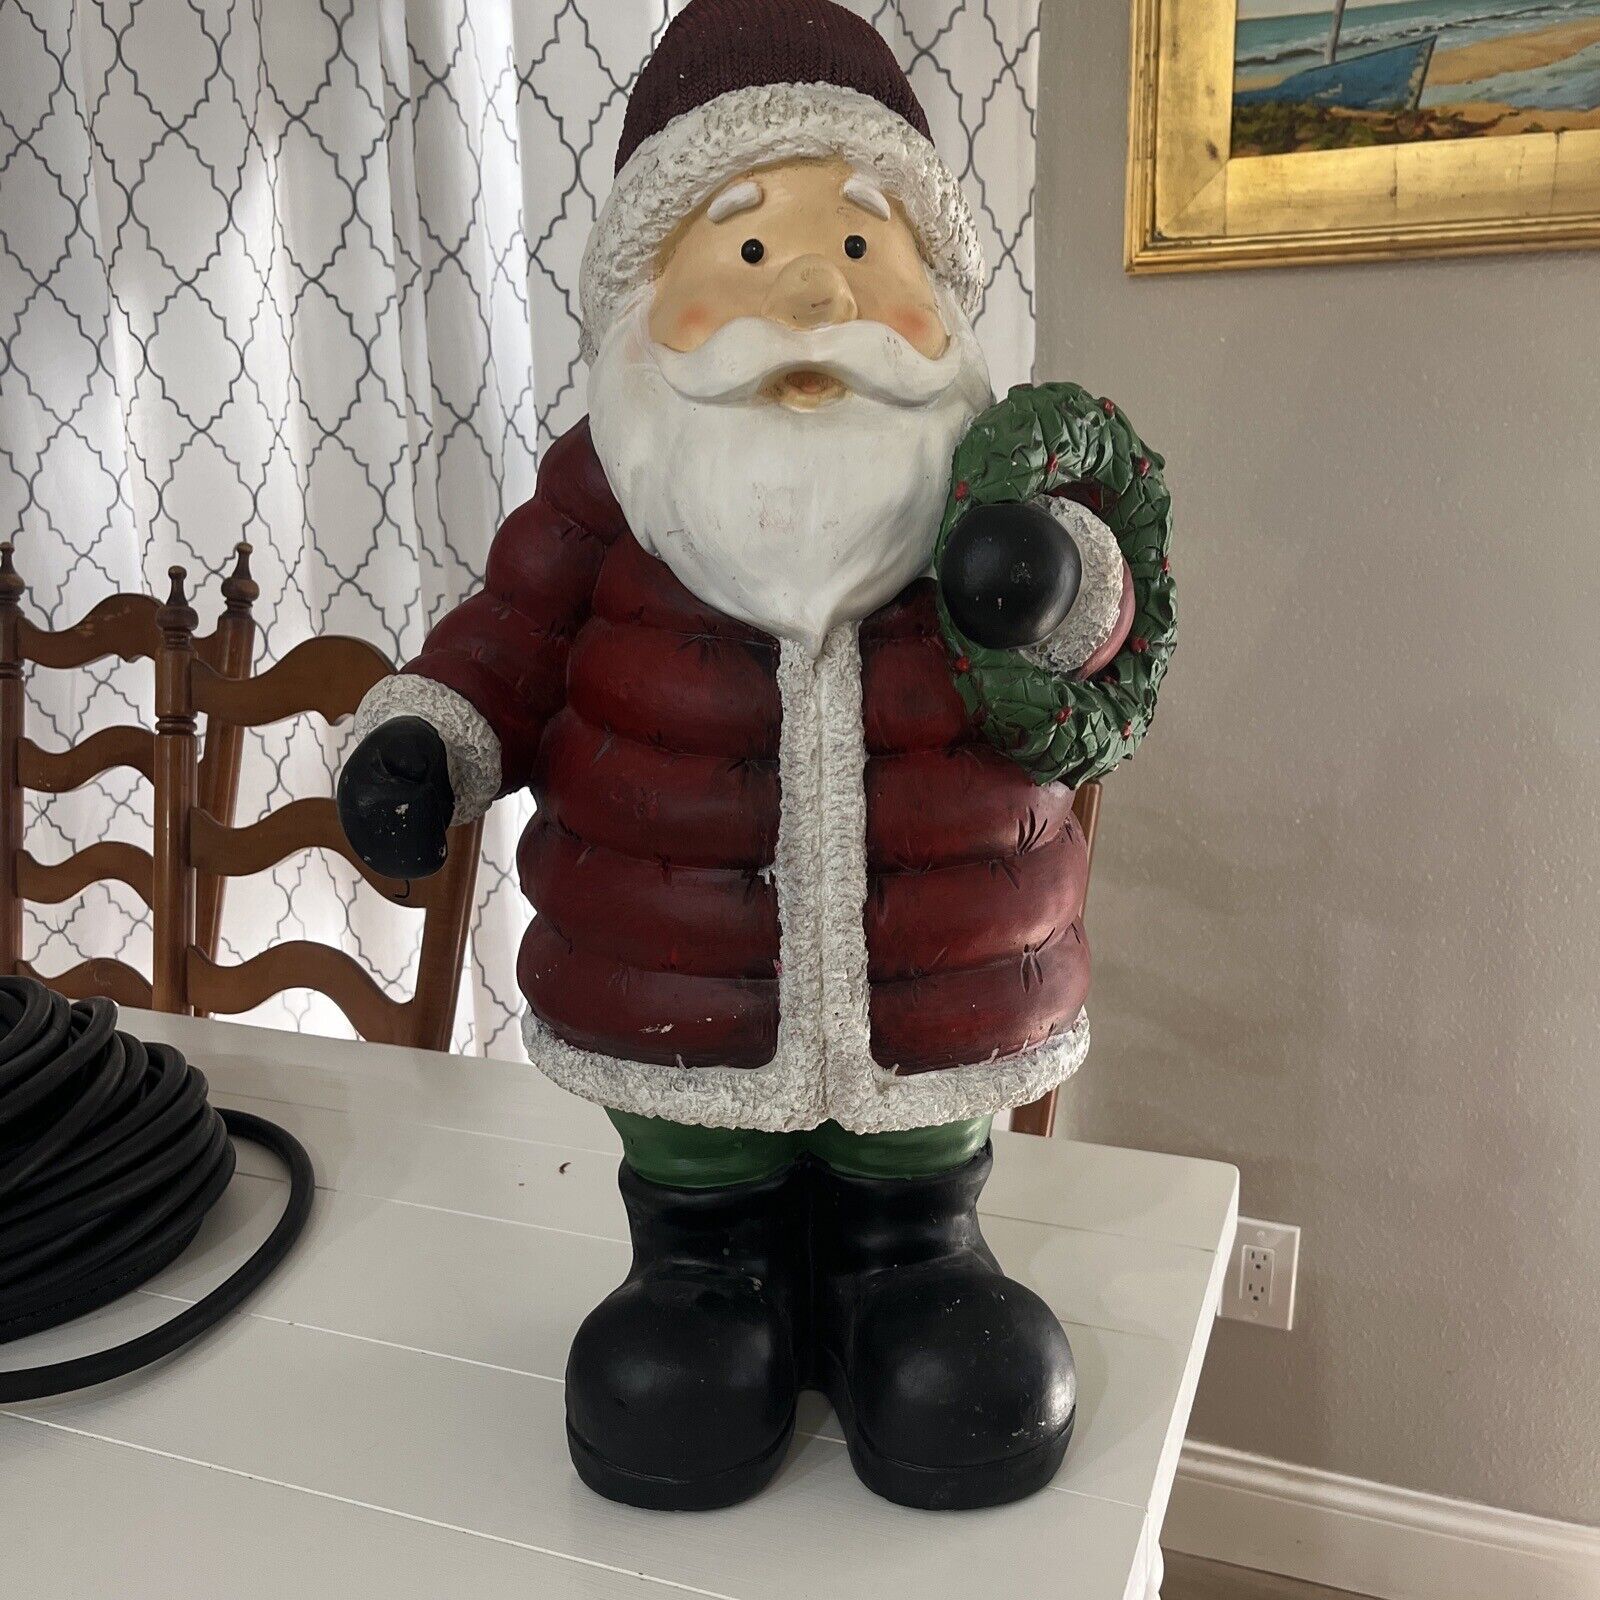 27” Vintage Santa Claus Statue with Wreath, Christmas, RARE and Unique